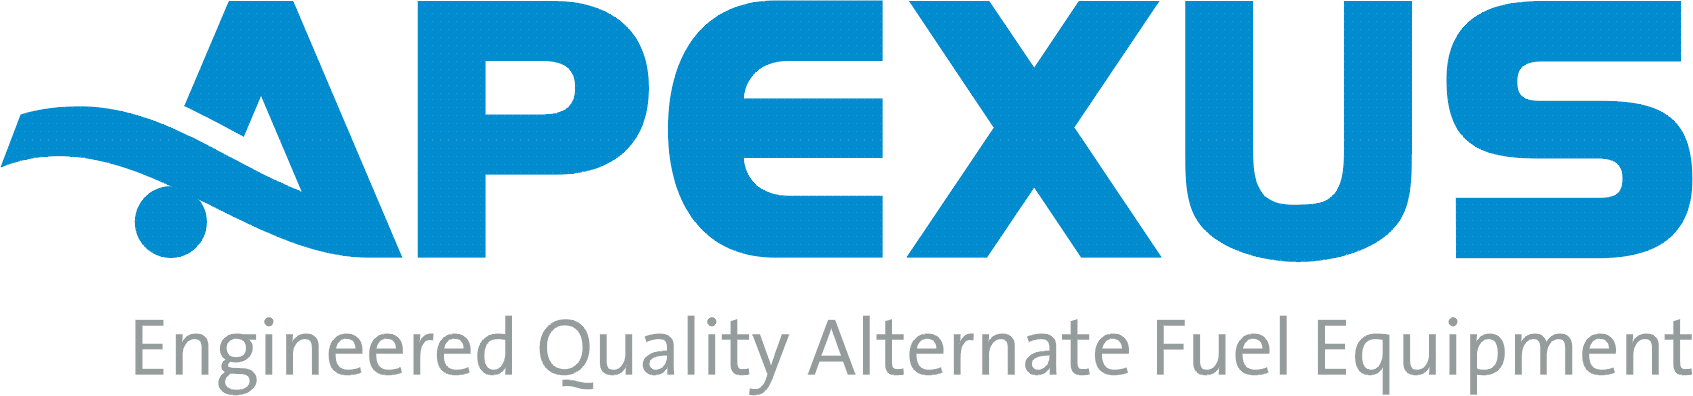 Apexus Logo with Slogan